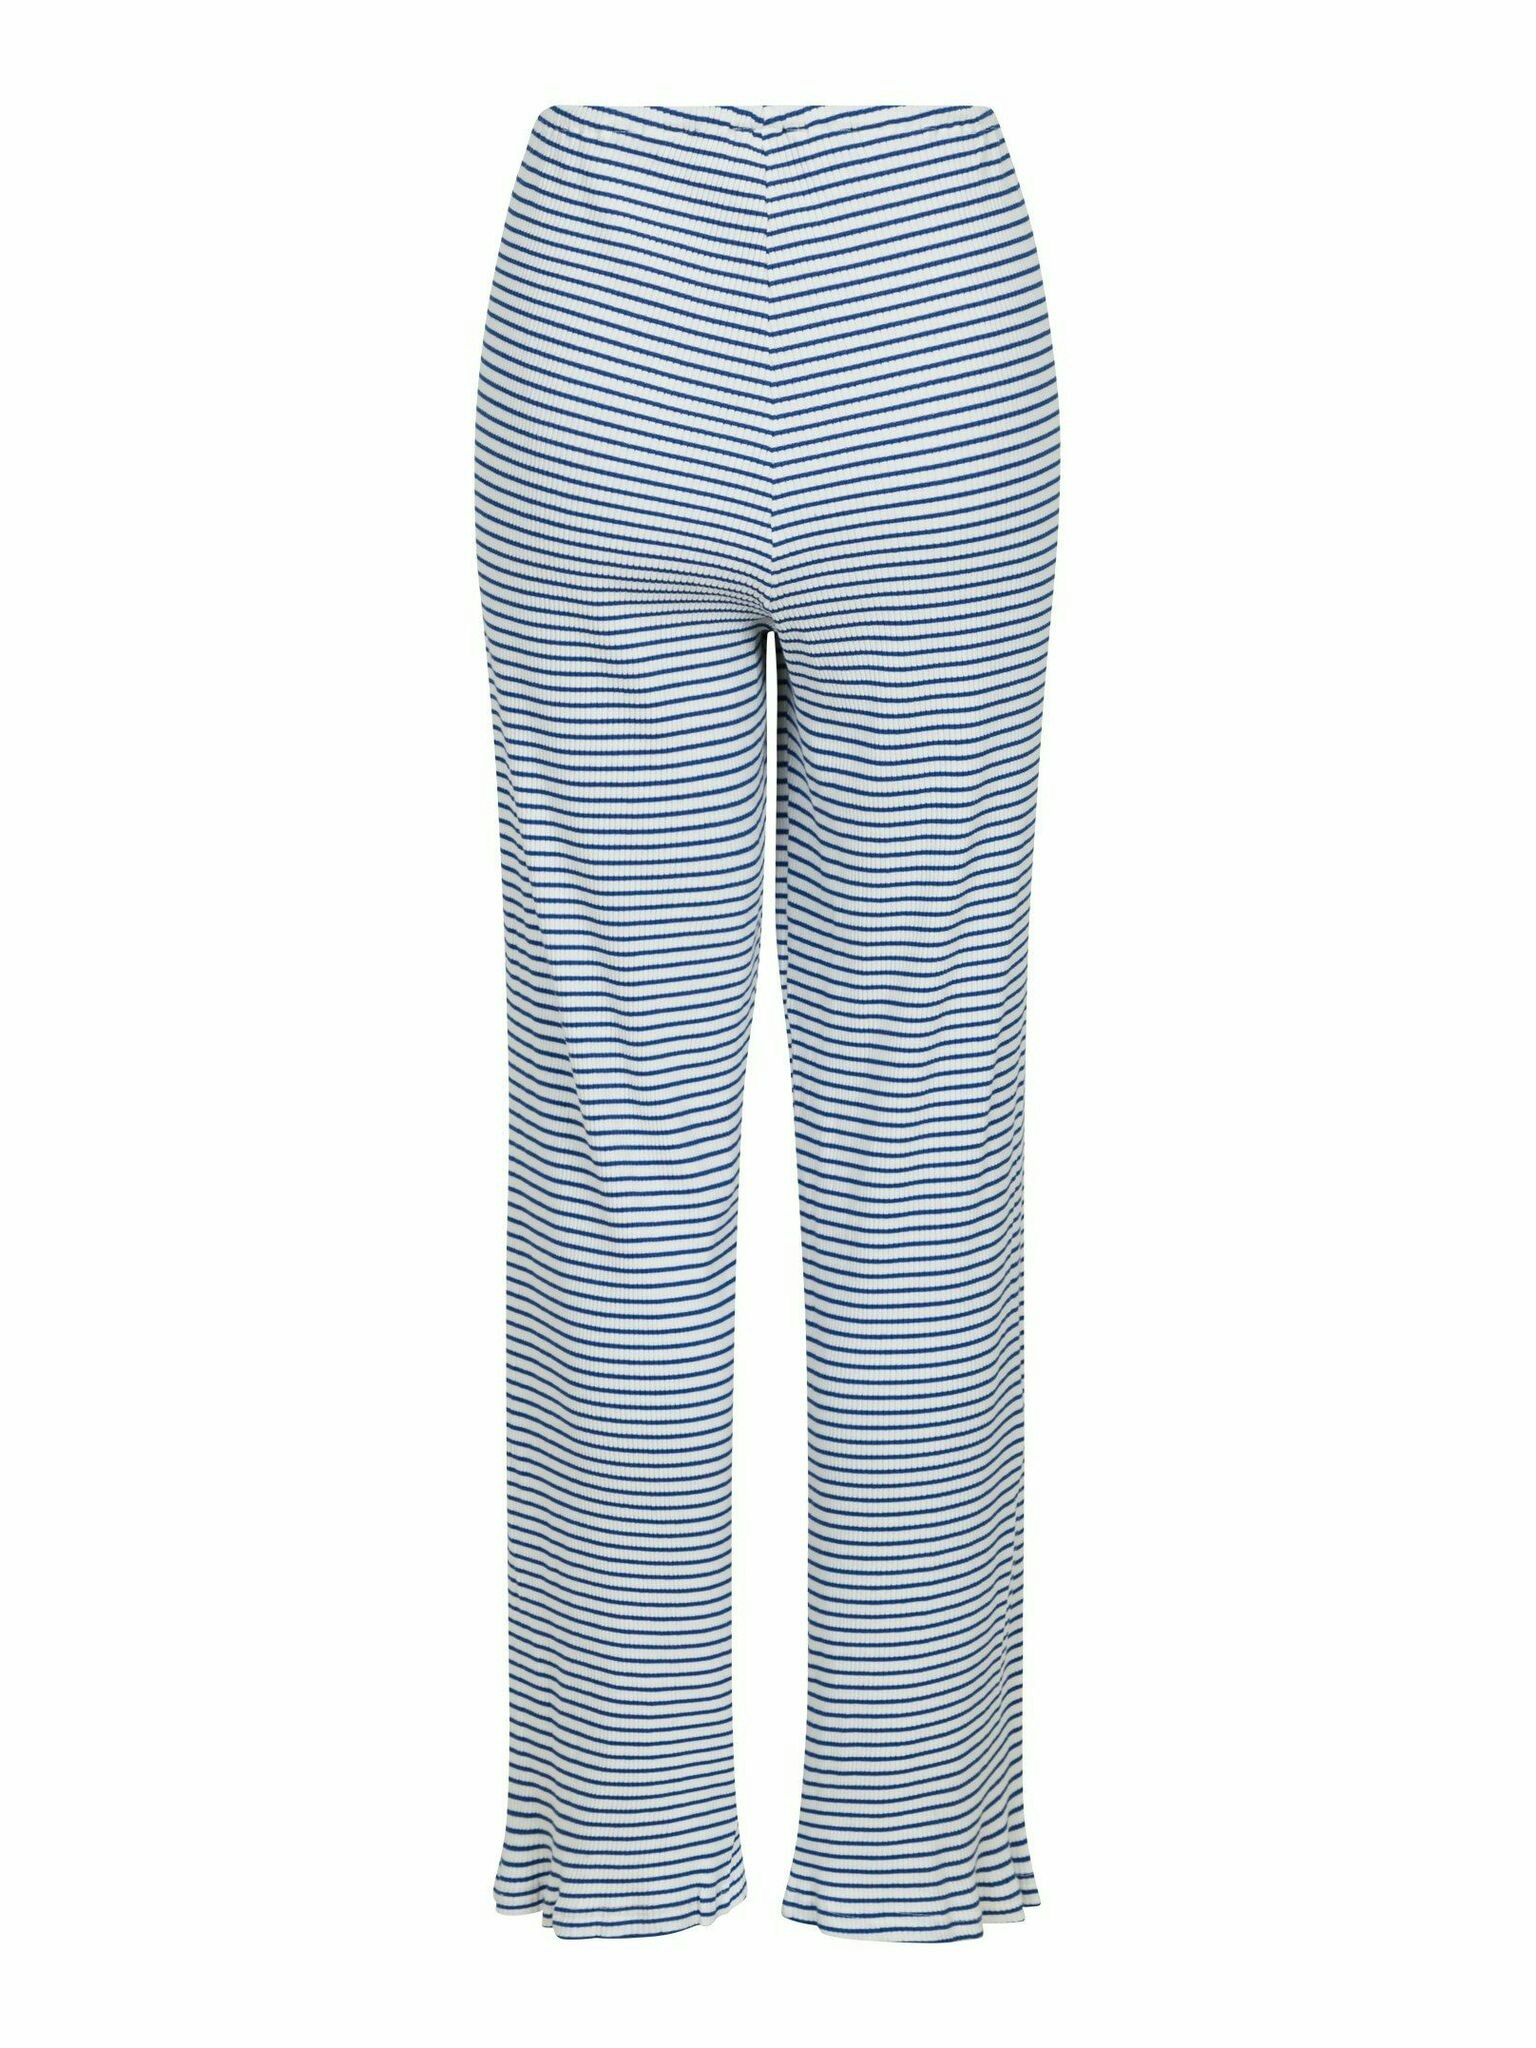 Neo Noir - Geri Stripe Pants (Blue)